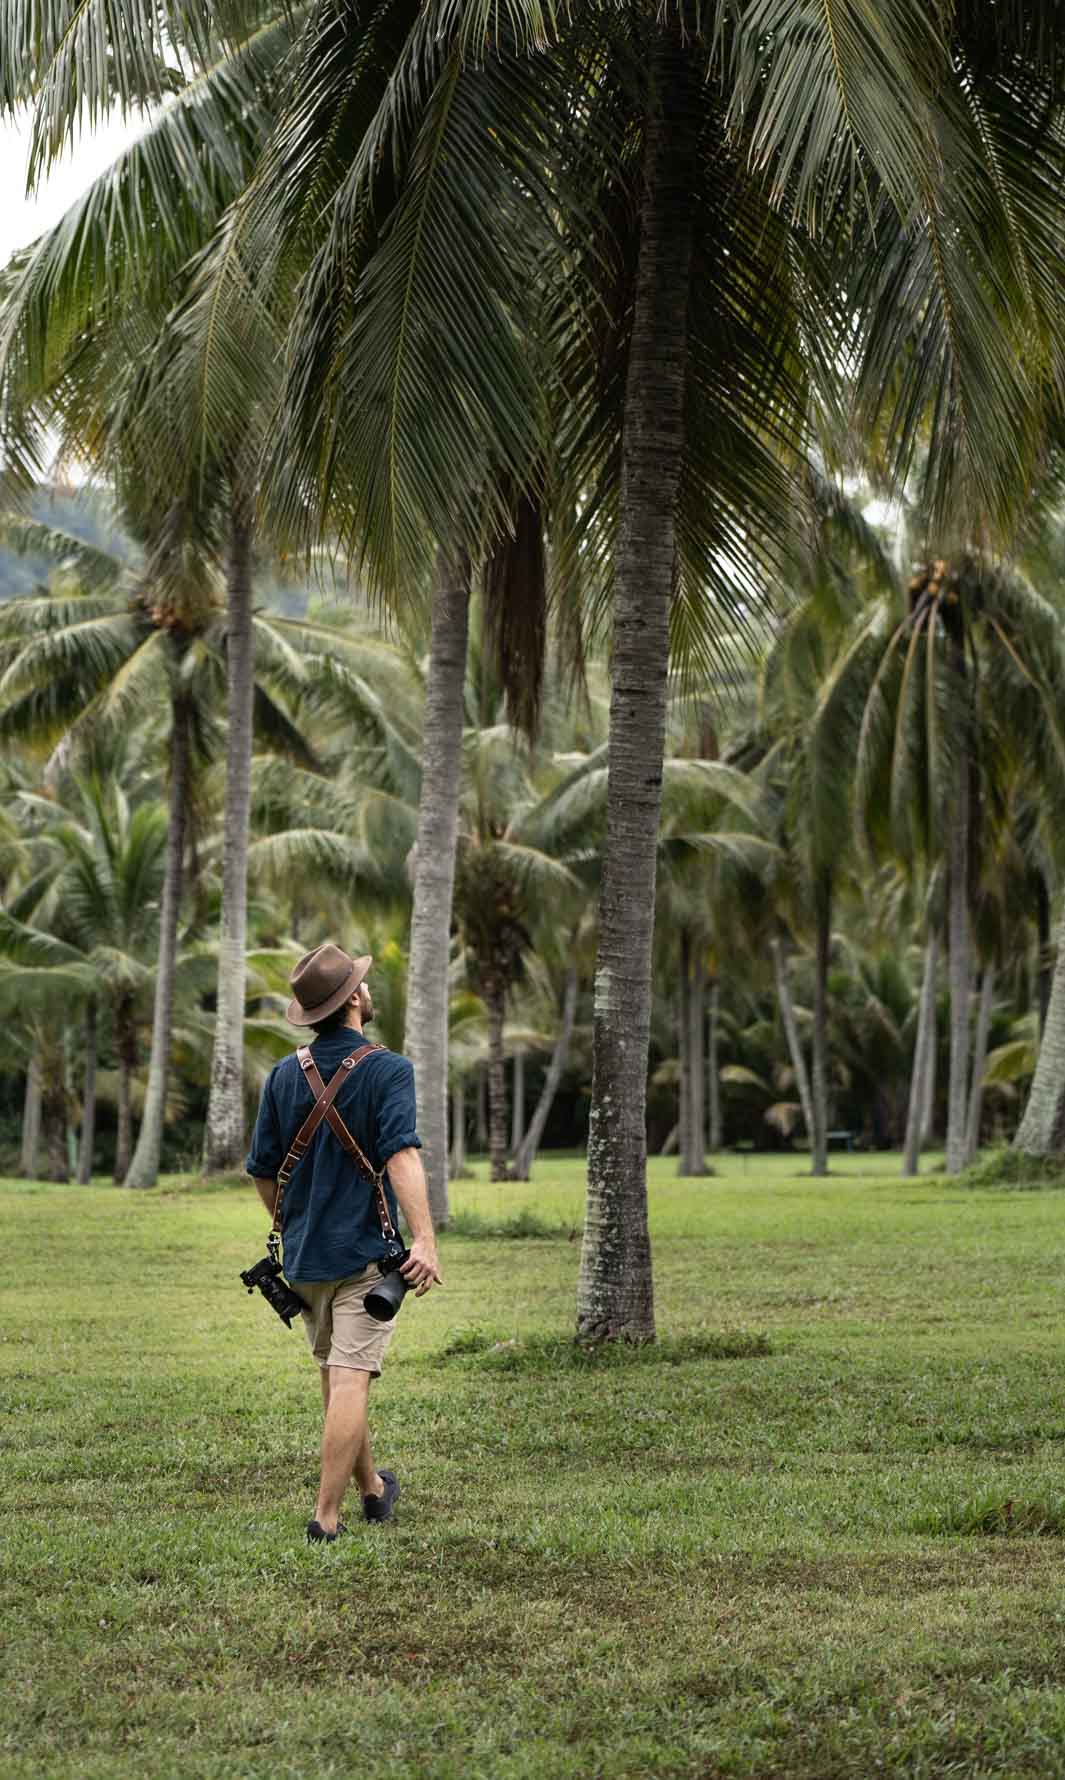 Australian landscape photographer david lloyd walking between palm trees